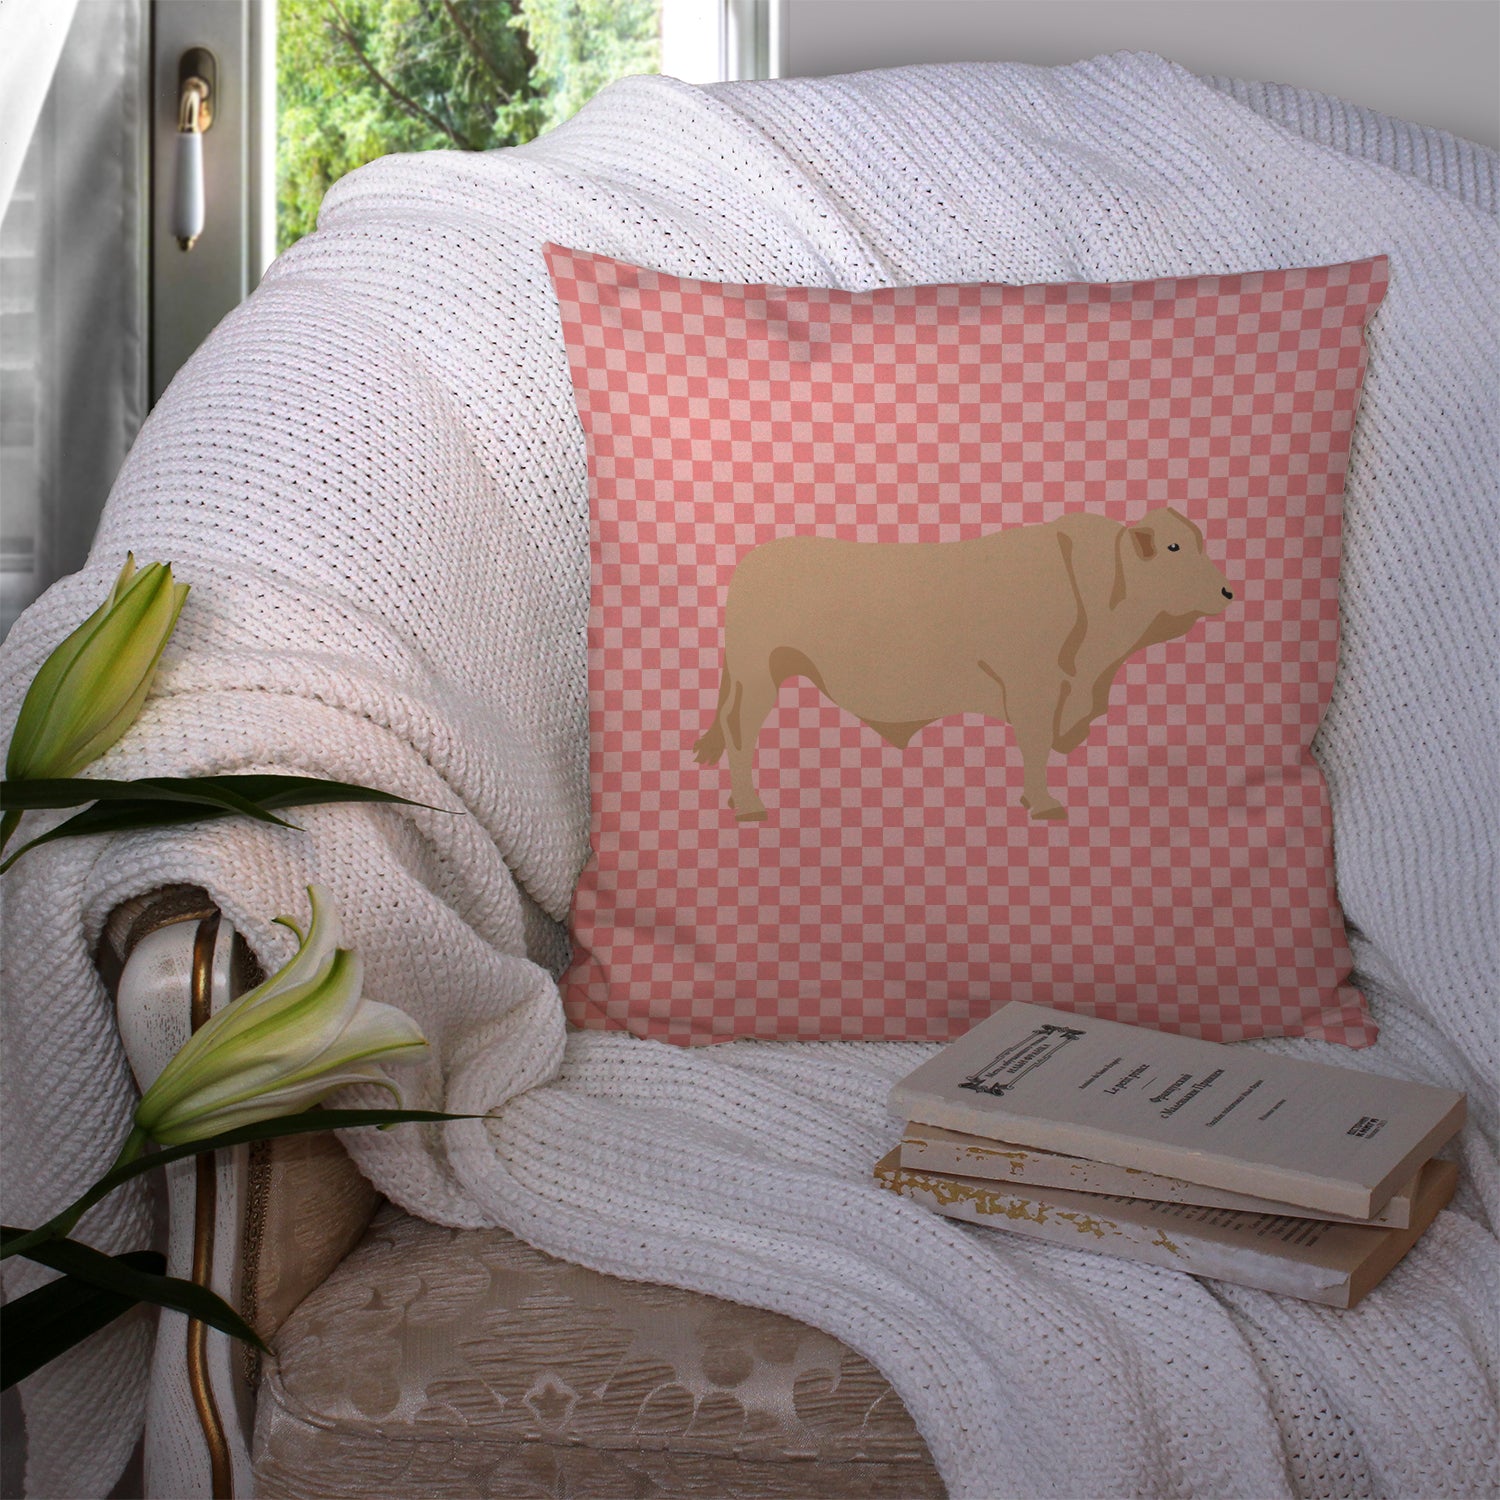 Charolais Cow Pink Check Fabric Decorative Pillow BB7826PW1414 - the-store.com